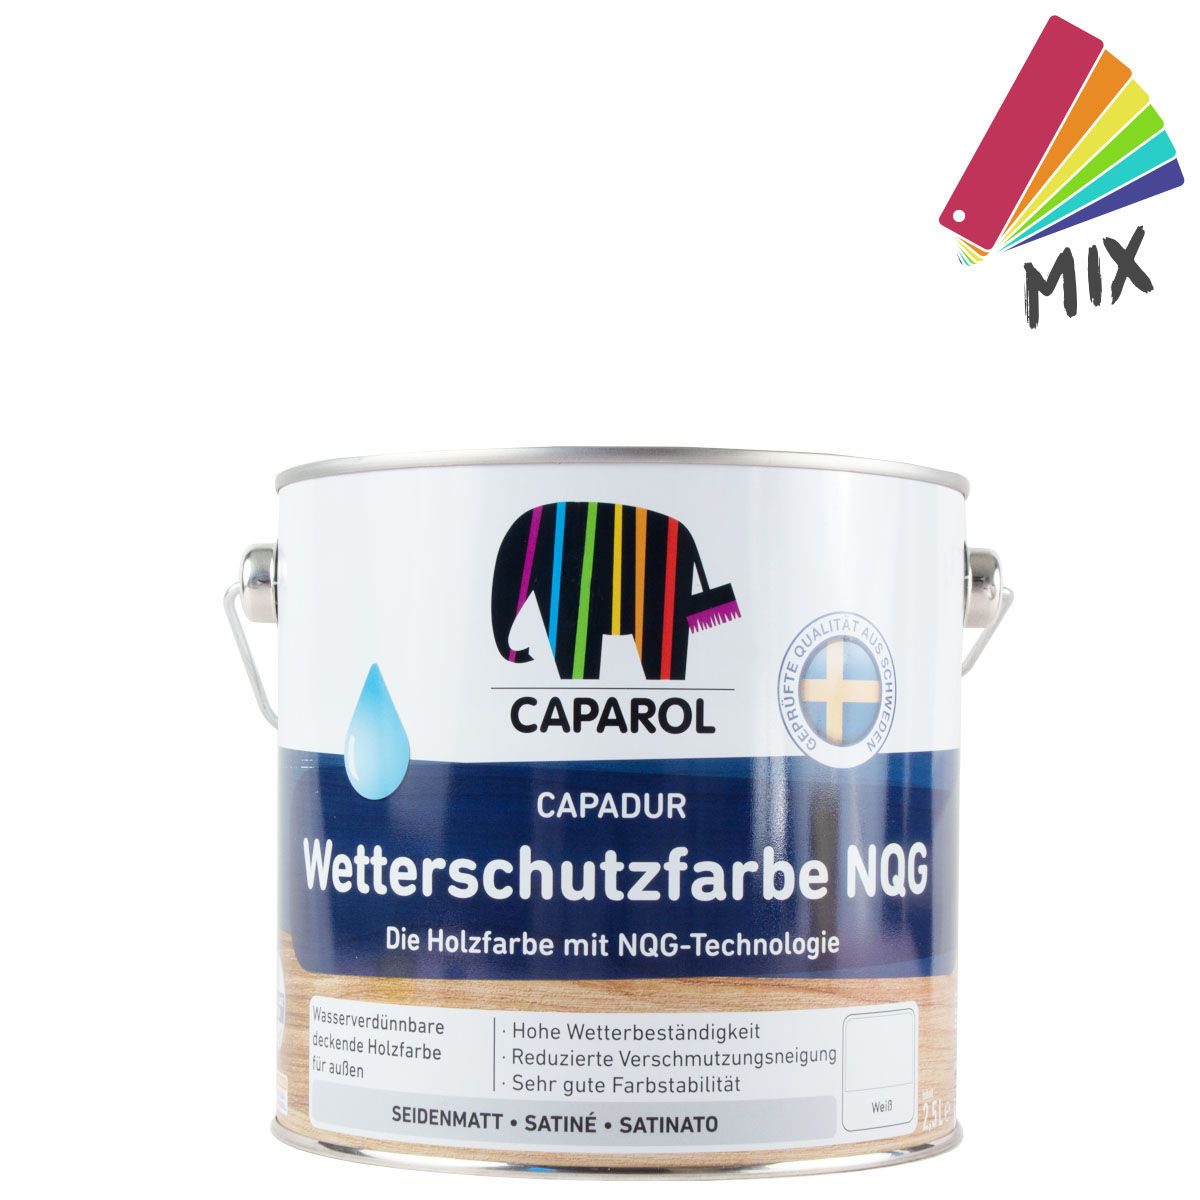 caparol_capadur_wetterschutzfarbe_NQG_2,5l_mixicon_gross